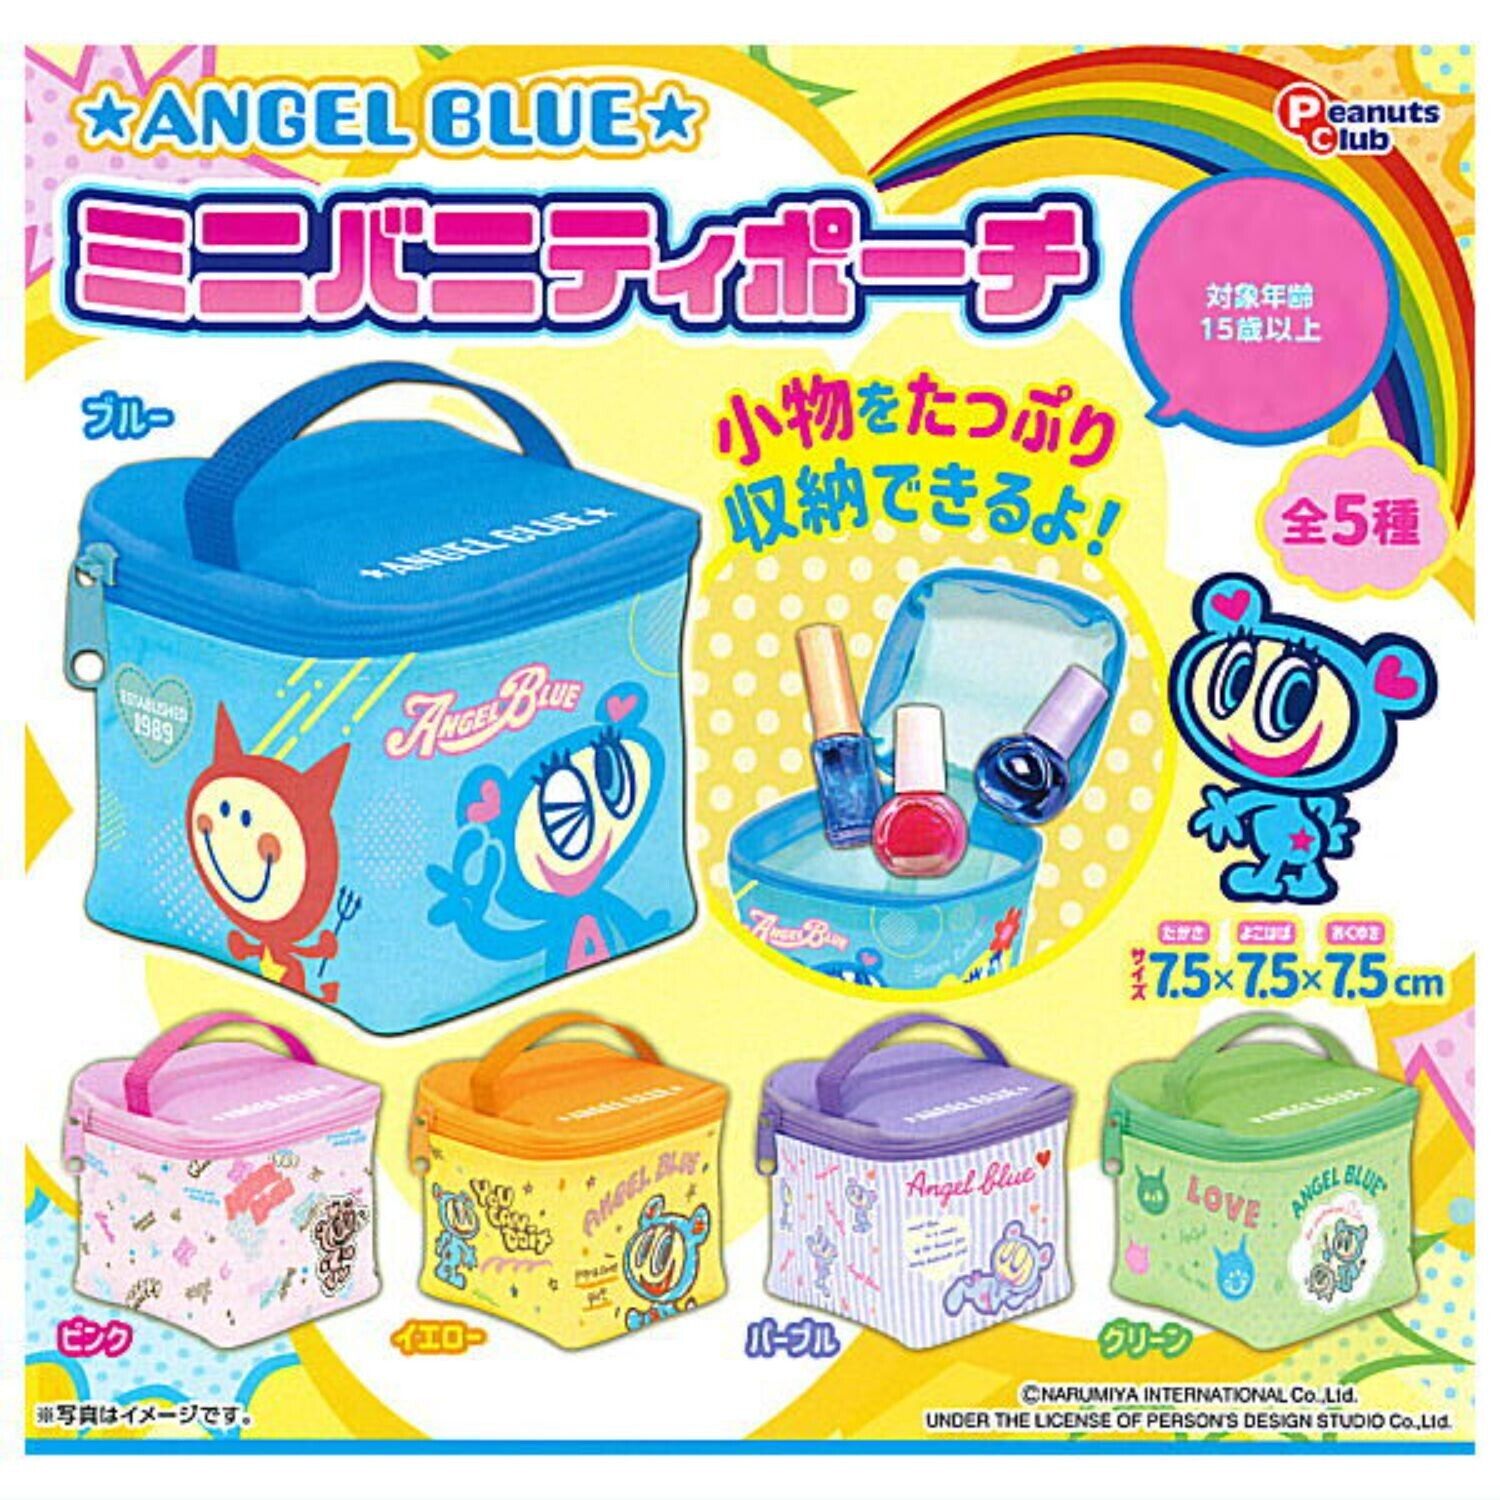 ANGEL BLUE Mini Vanity Pouch Capsule Toy 5 Types Full Comp Set Gacha New Japan